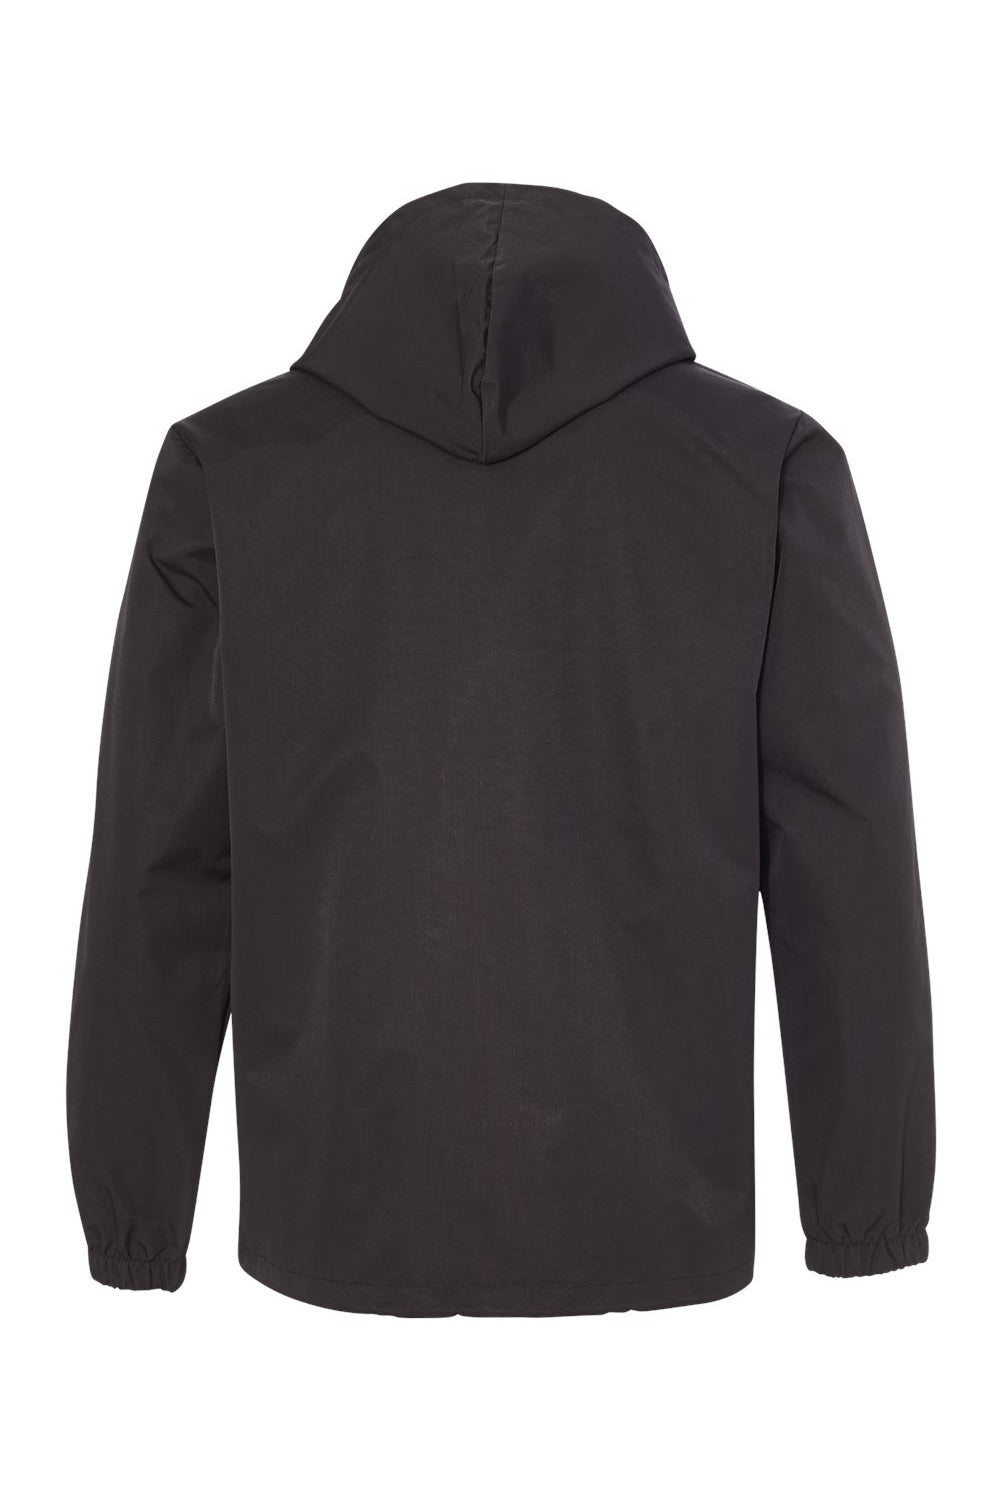 Independent Trading Co. EXP95NB Mens Water Resistant Snap Down Hooded Windbreaker Jacket Black Flat Back